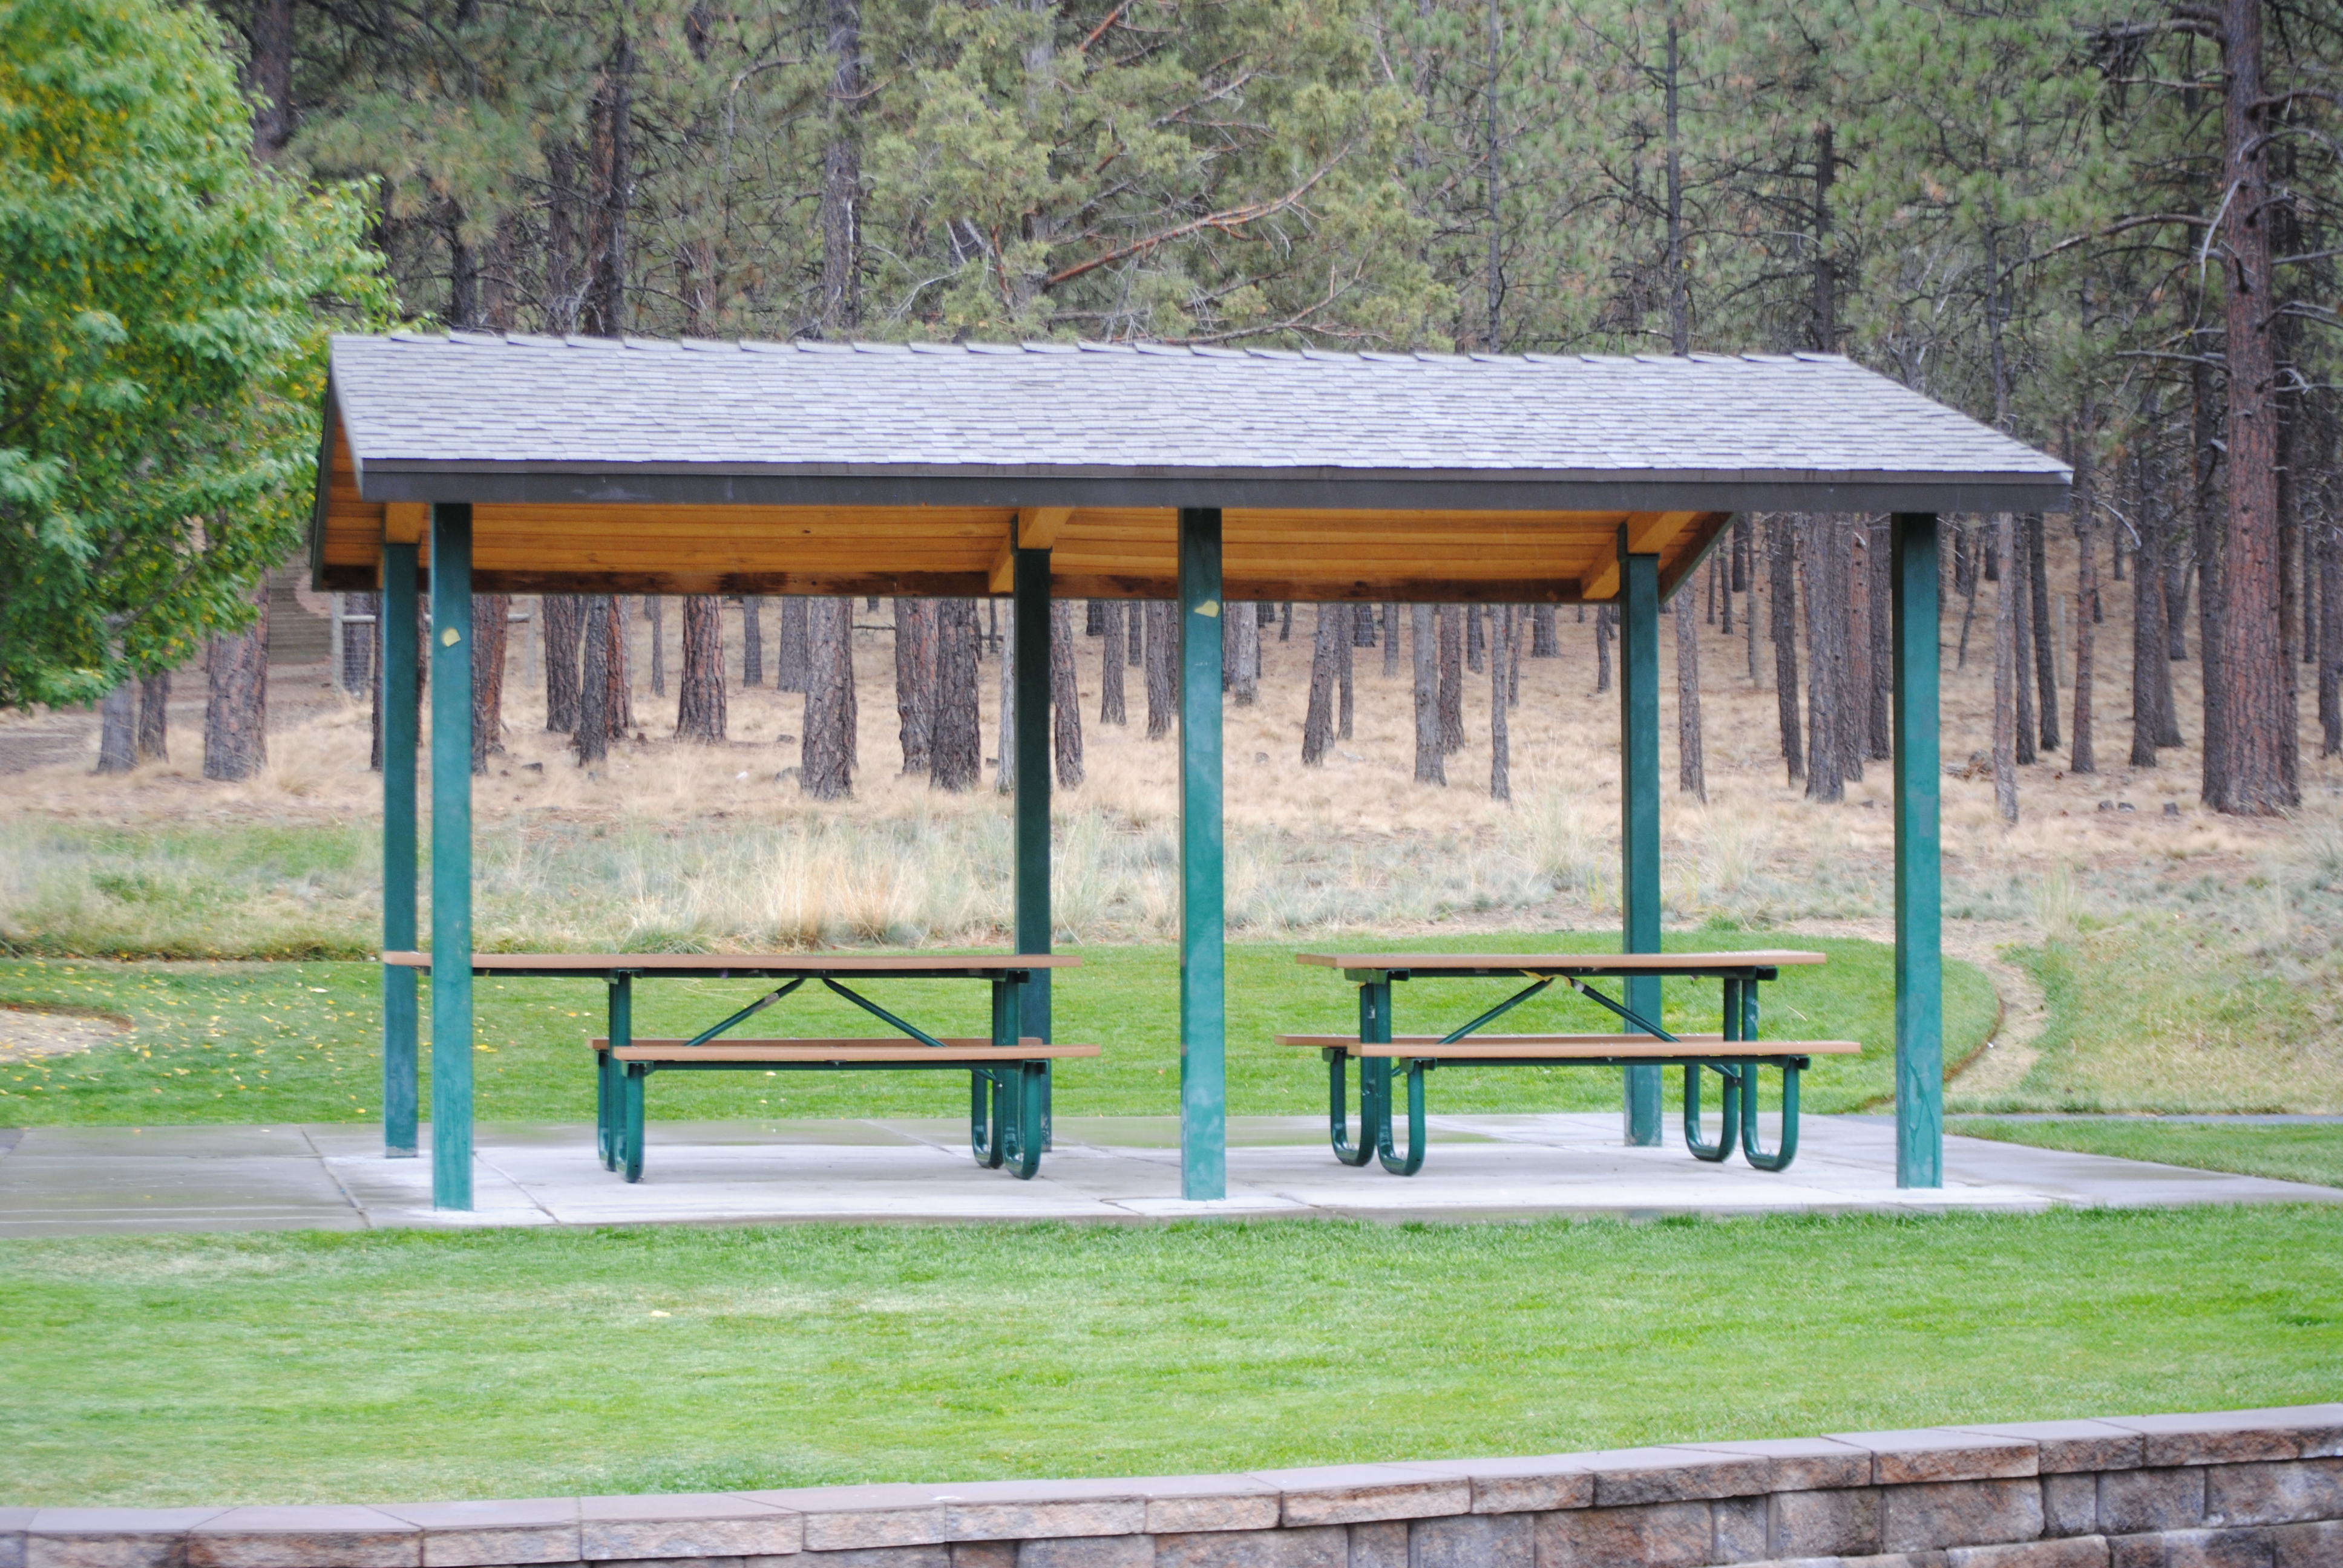 the shelter at quail park